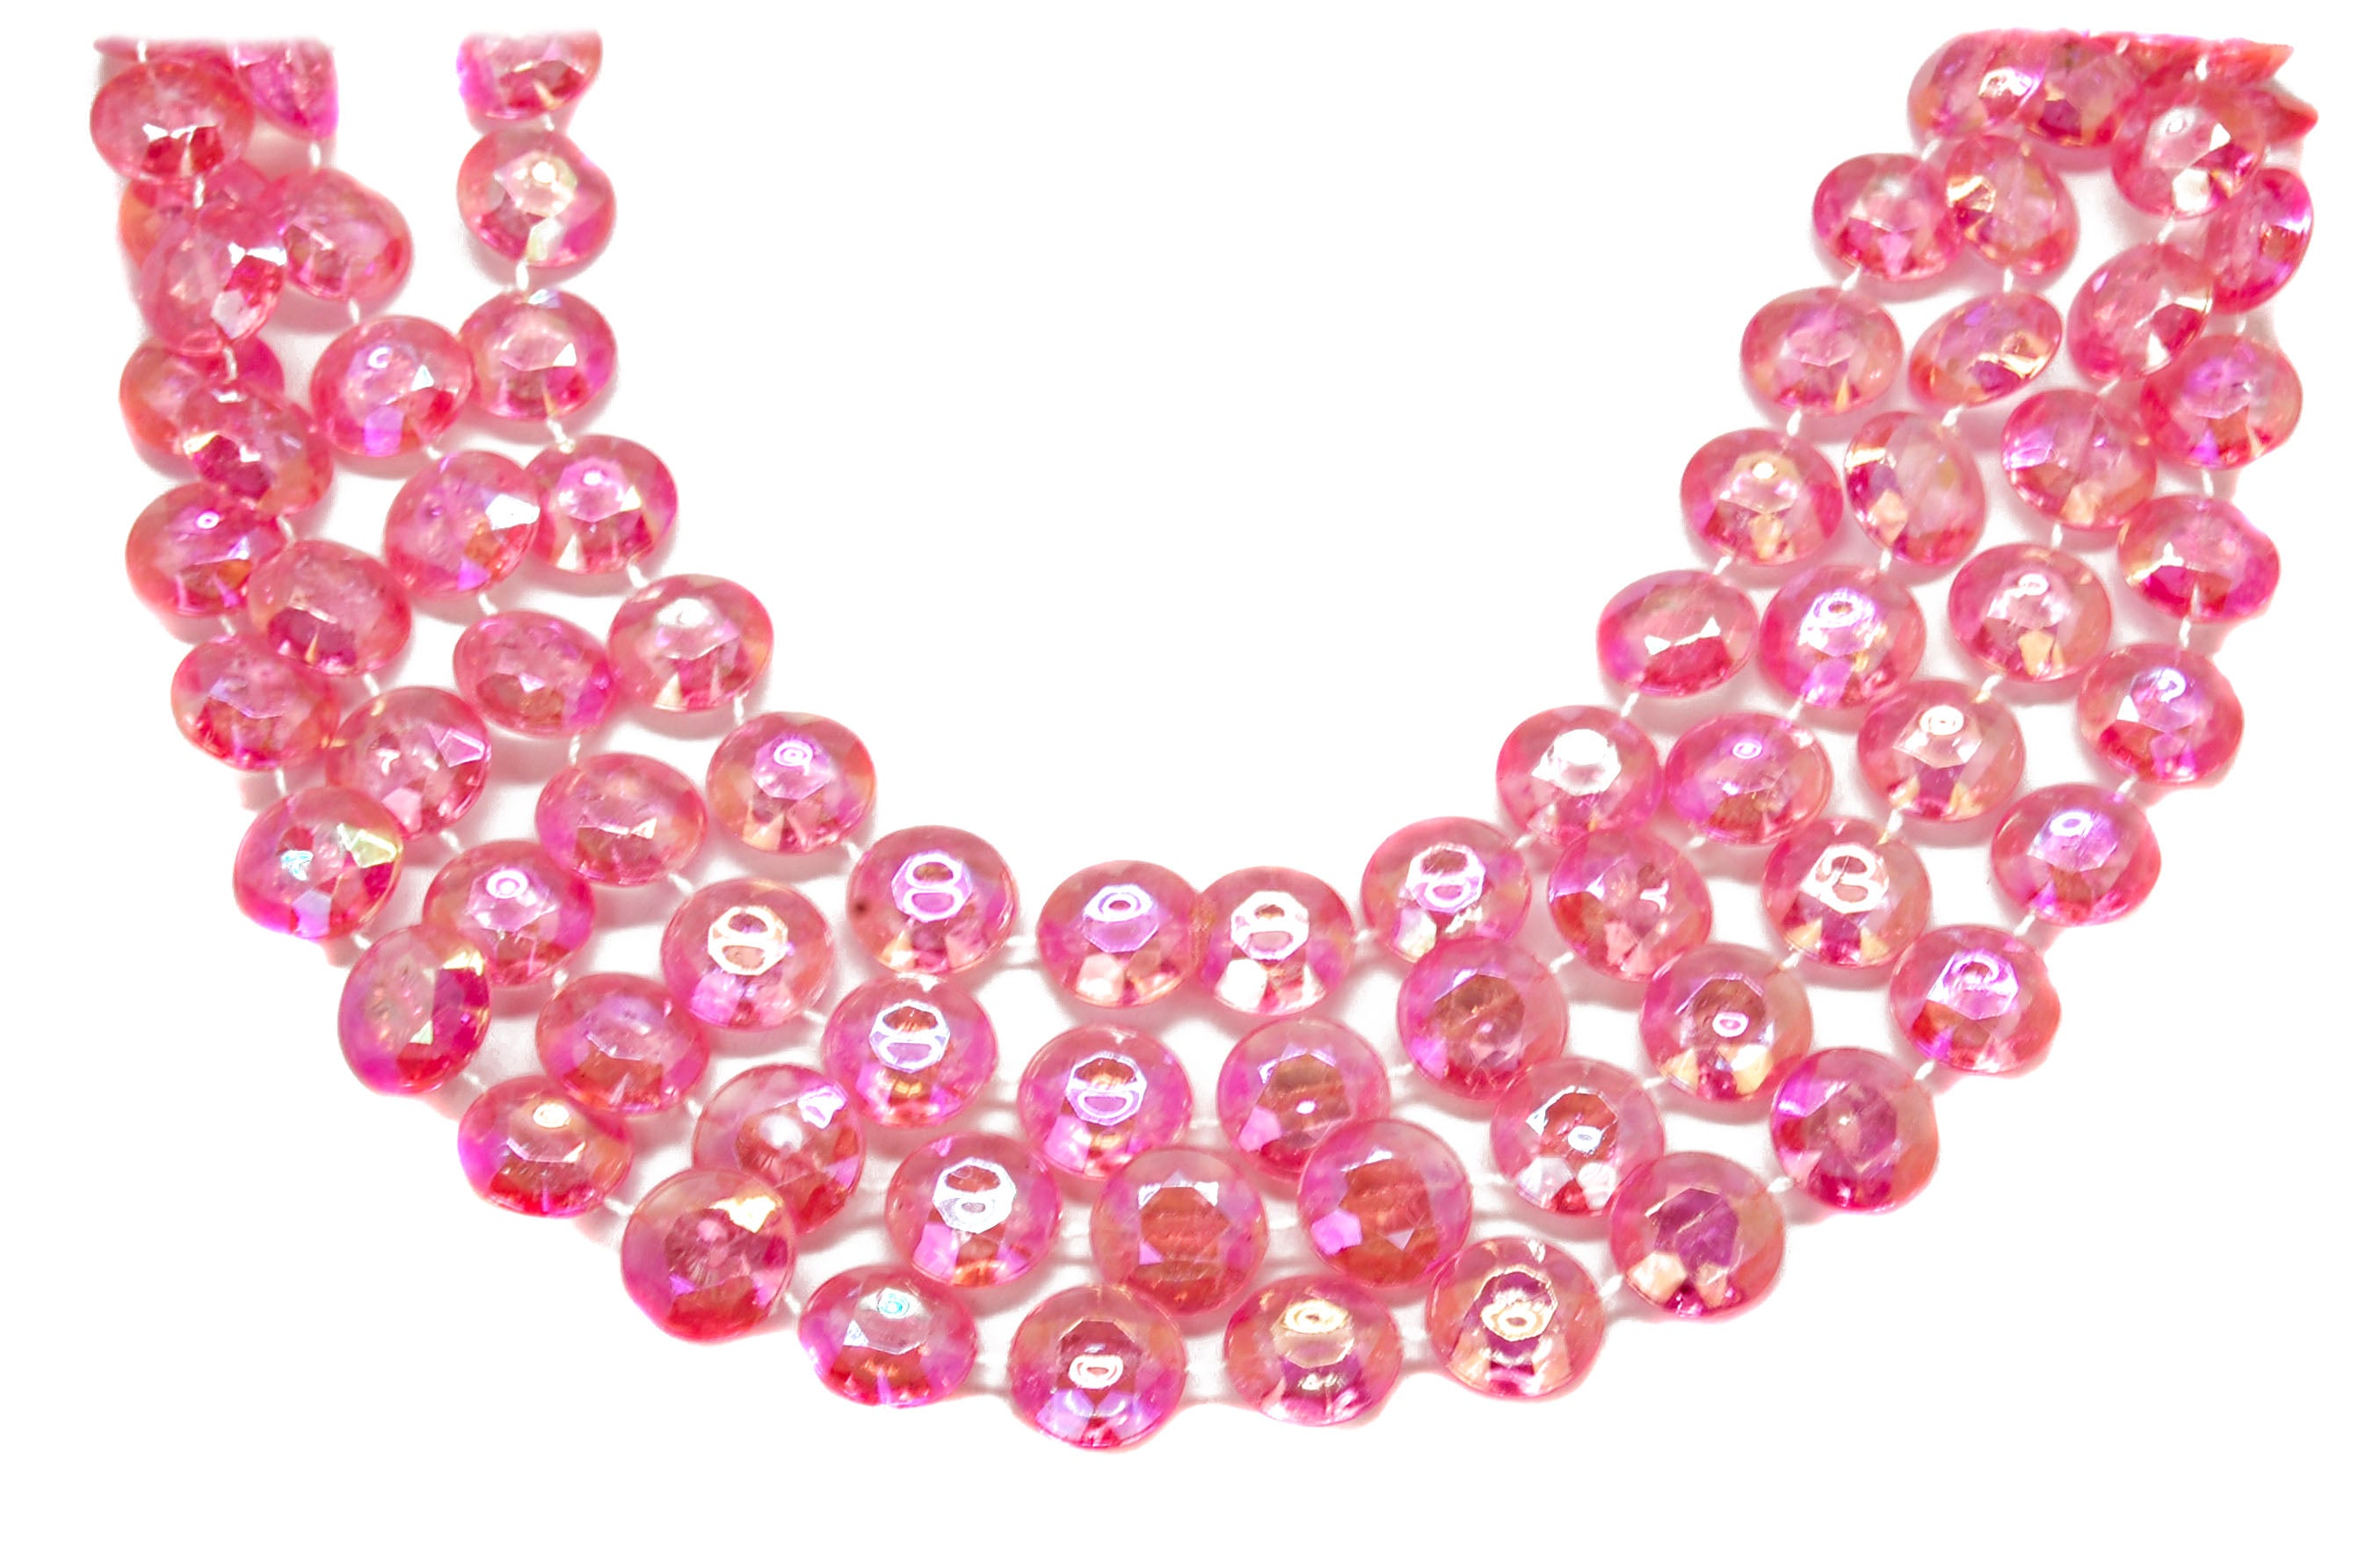 48 18mm Round Pearl Hot Pink Mardi Gras Beads